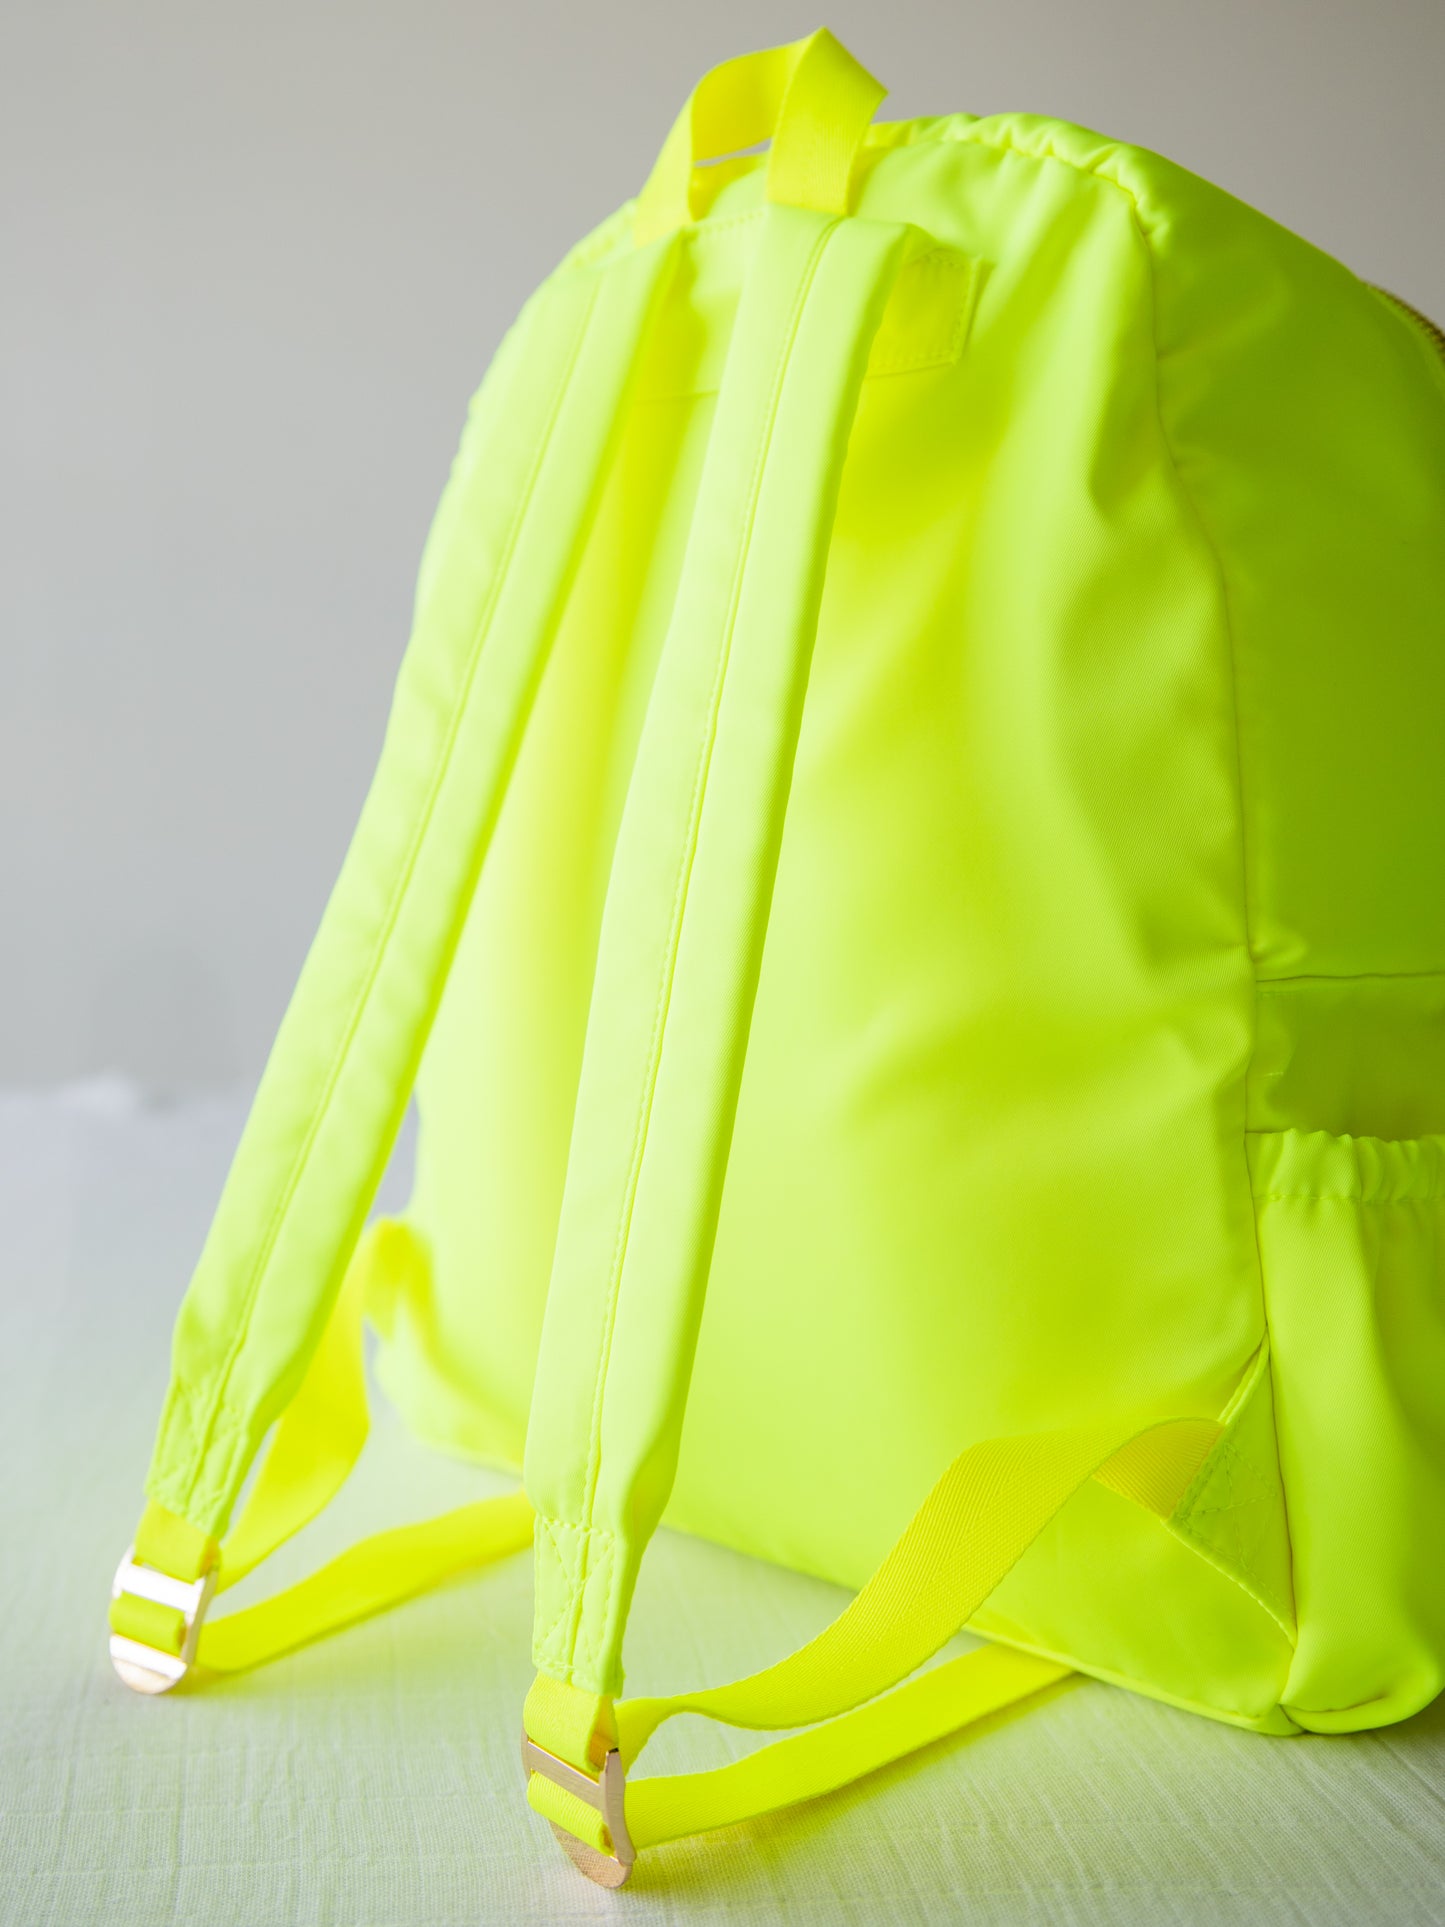 Retro Backpack - Neon Lights